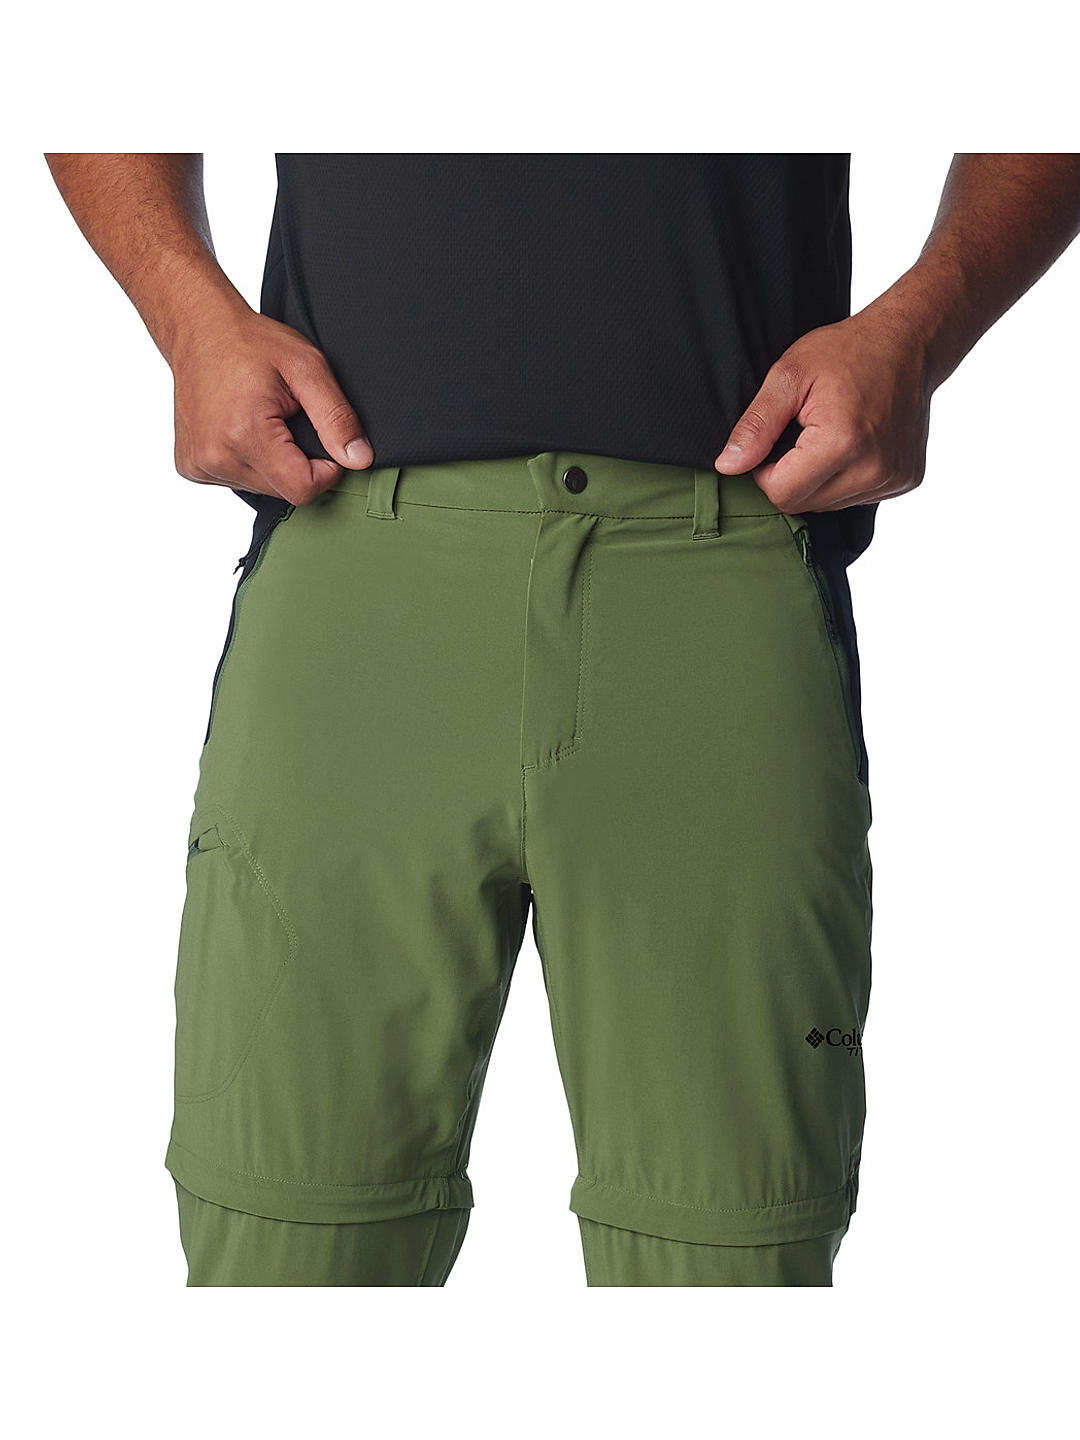 Men's Convertible Hiking Pants | REI Co-op